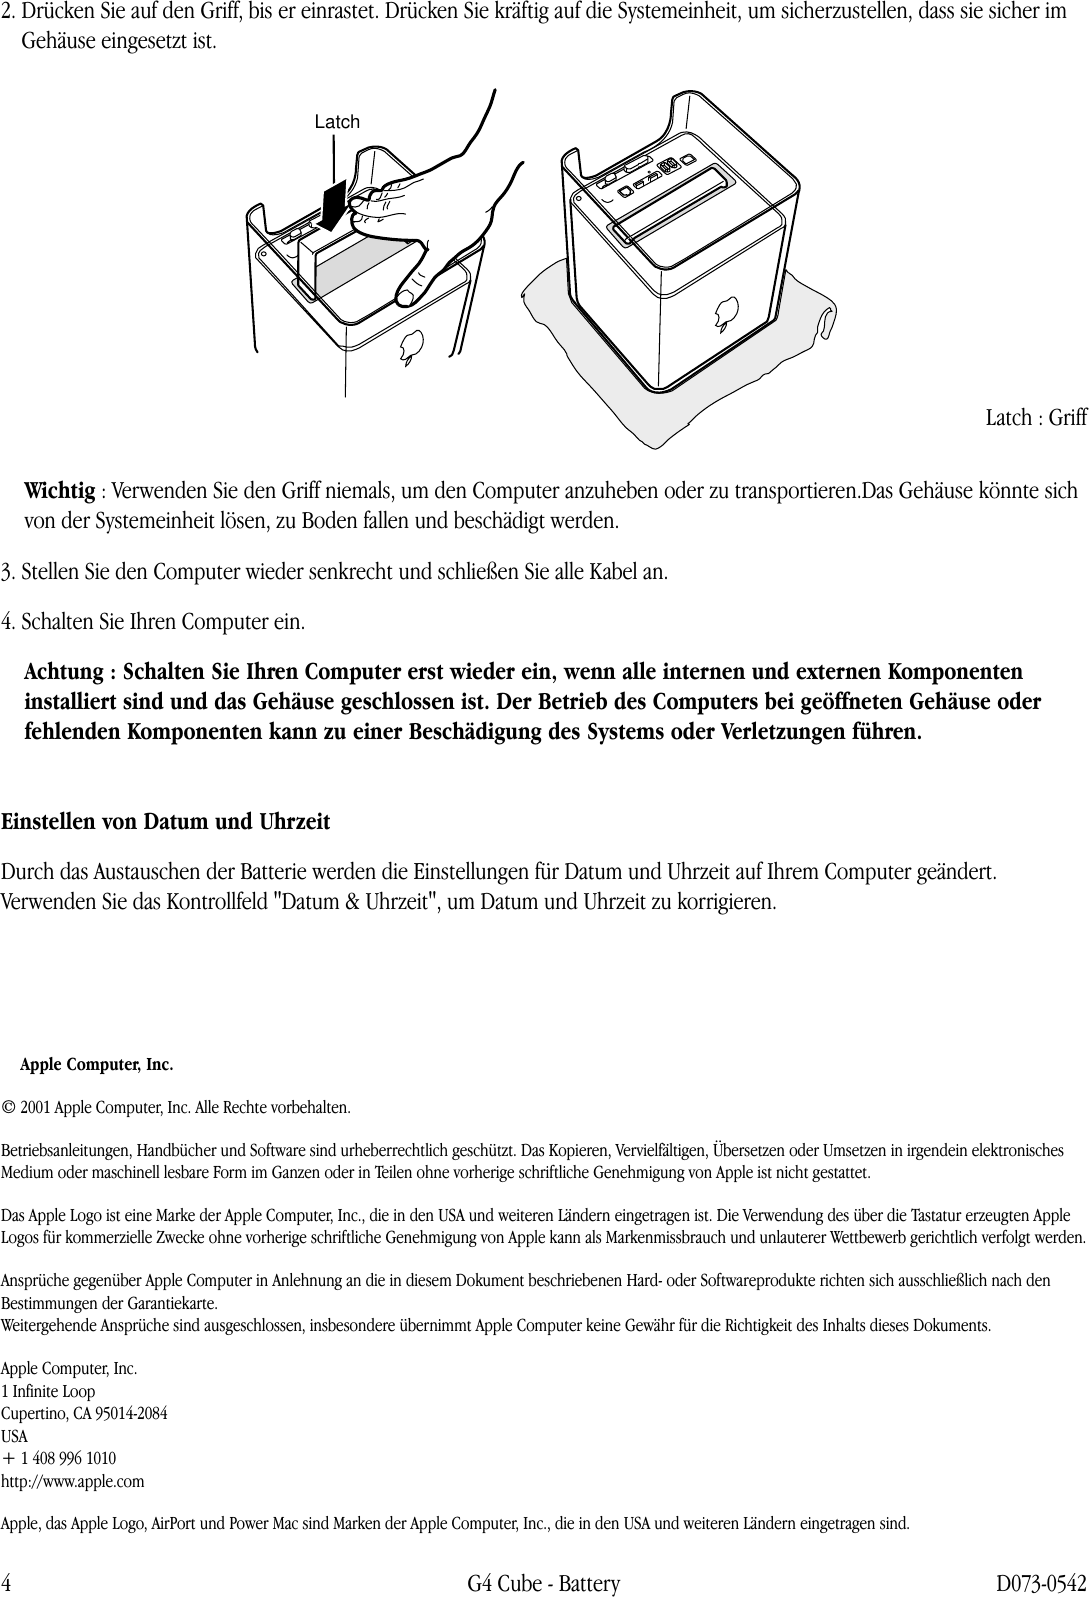 Page 4 of 4 - Apple Power Mac G4 (Cube) Battery User Manual - Batterie Installationsanweisungen Battery.cube